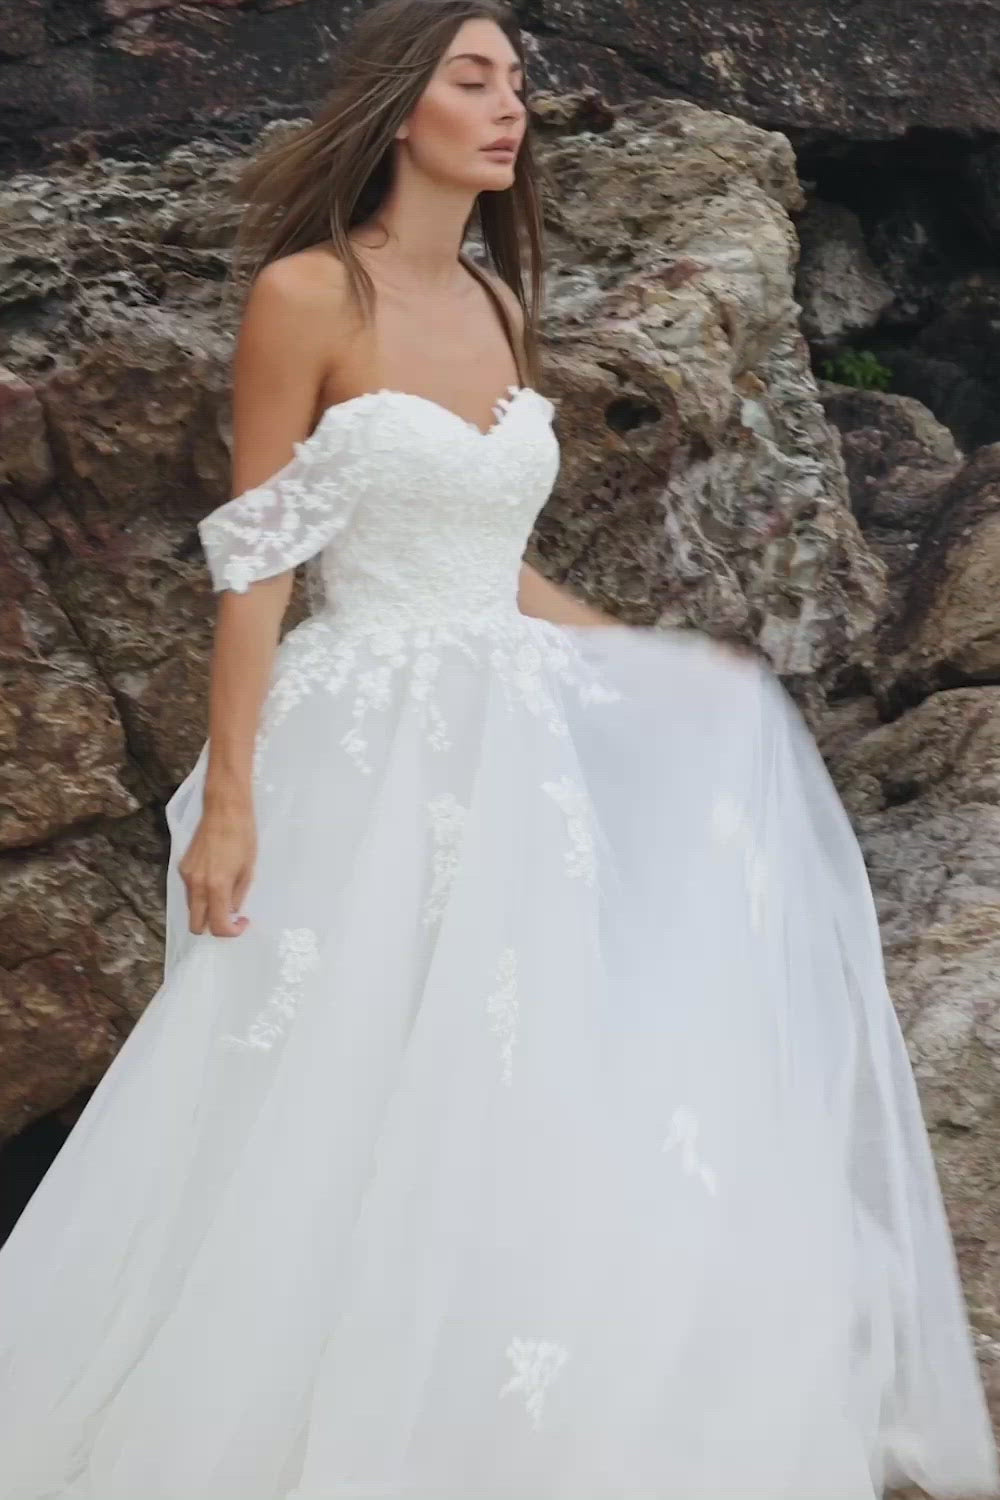 Blossom by Tania Olsen Vintage White Wedding Dress